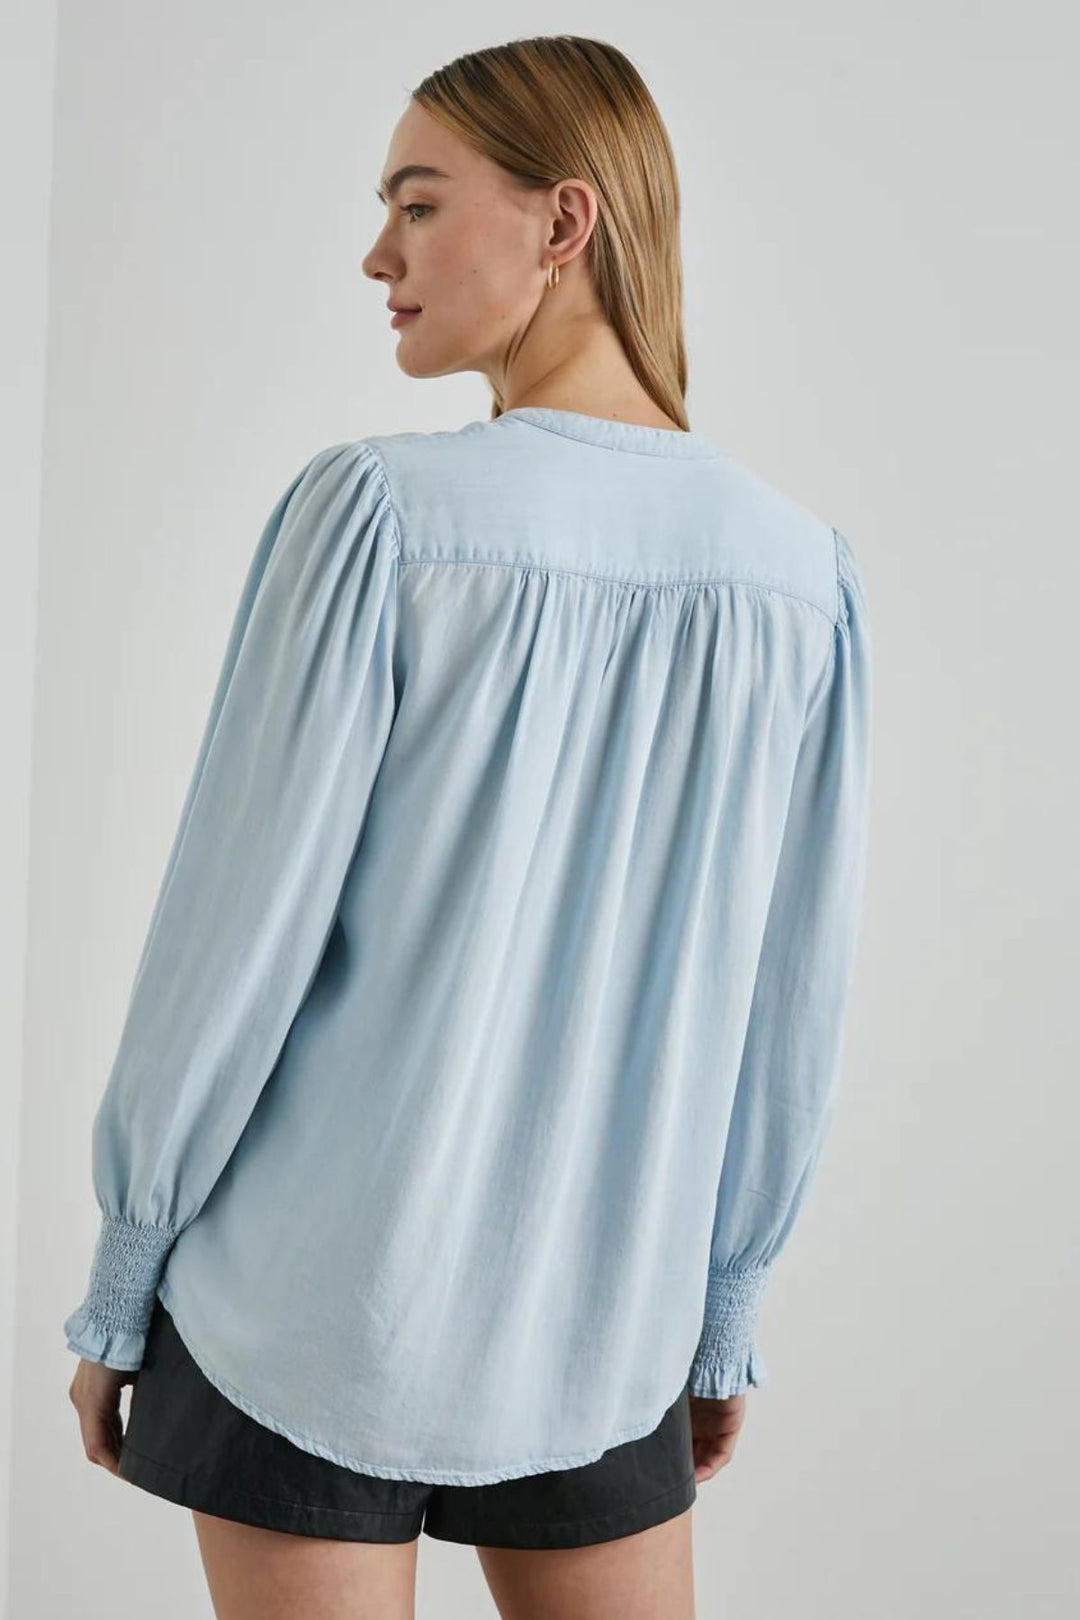 Daphne Shirt (Light Vintage)